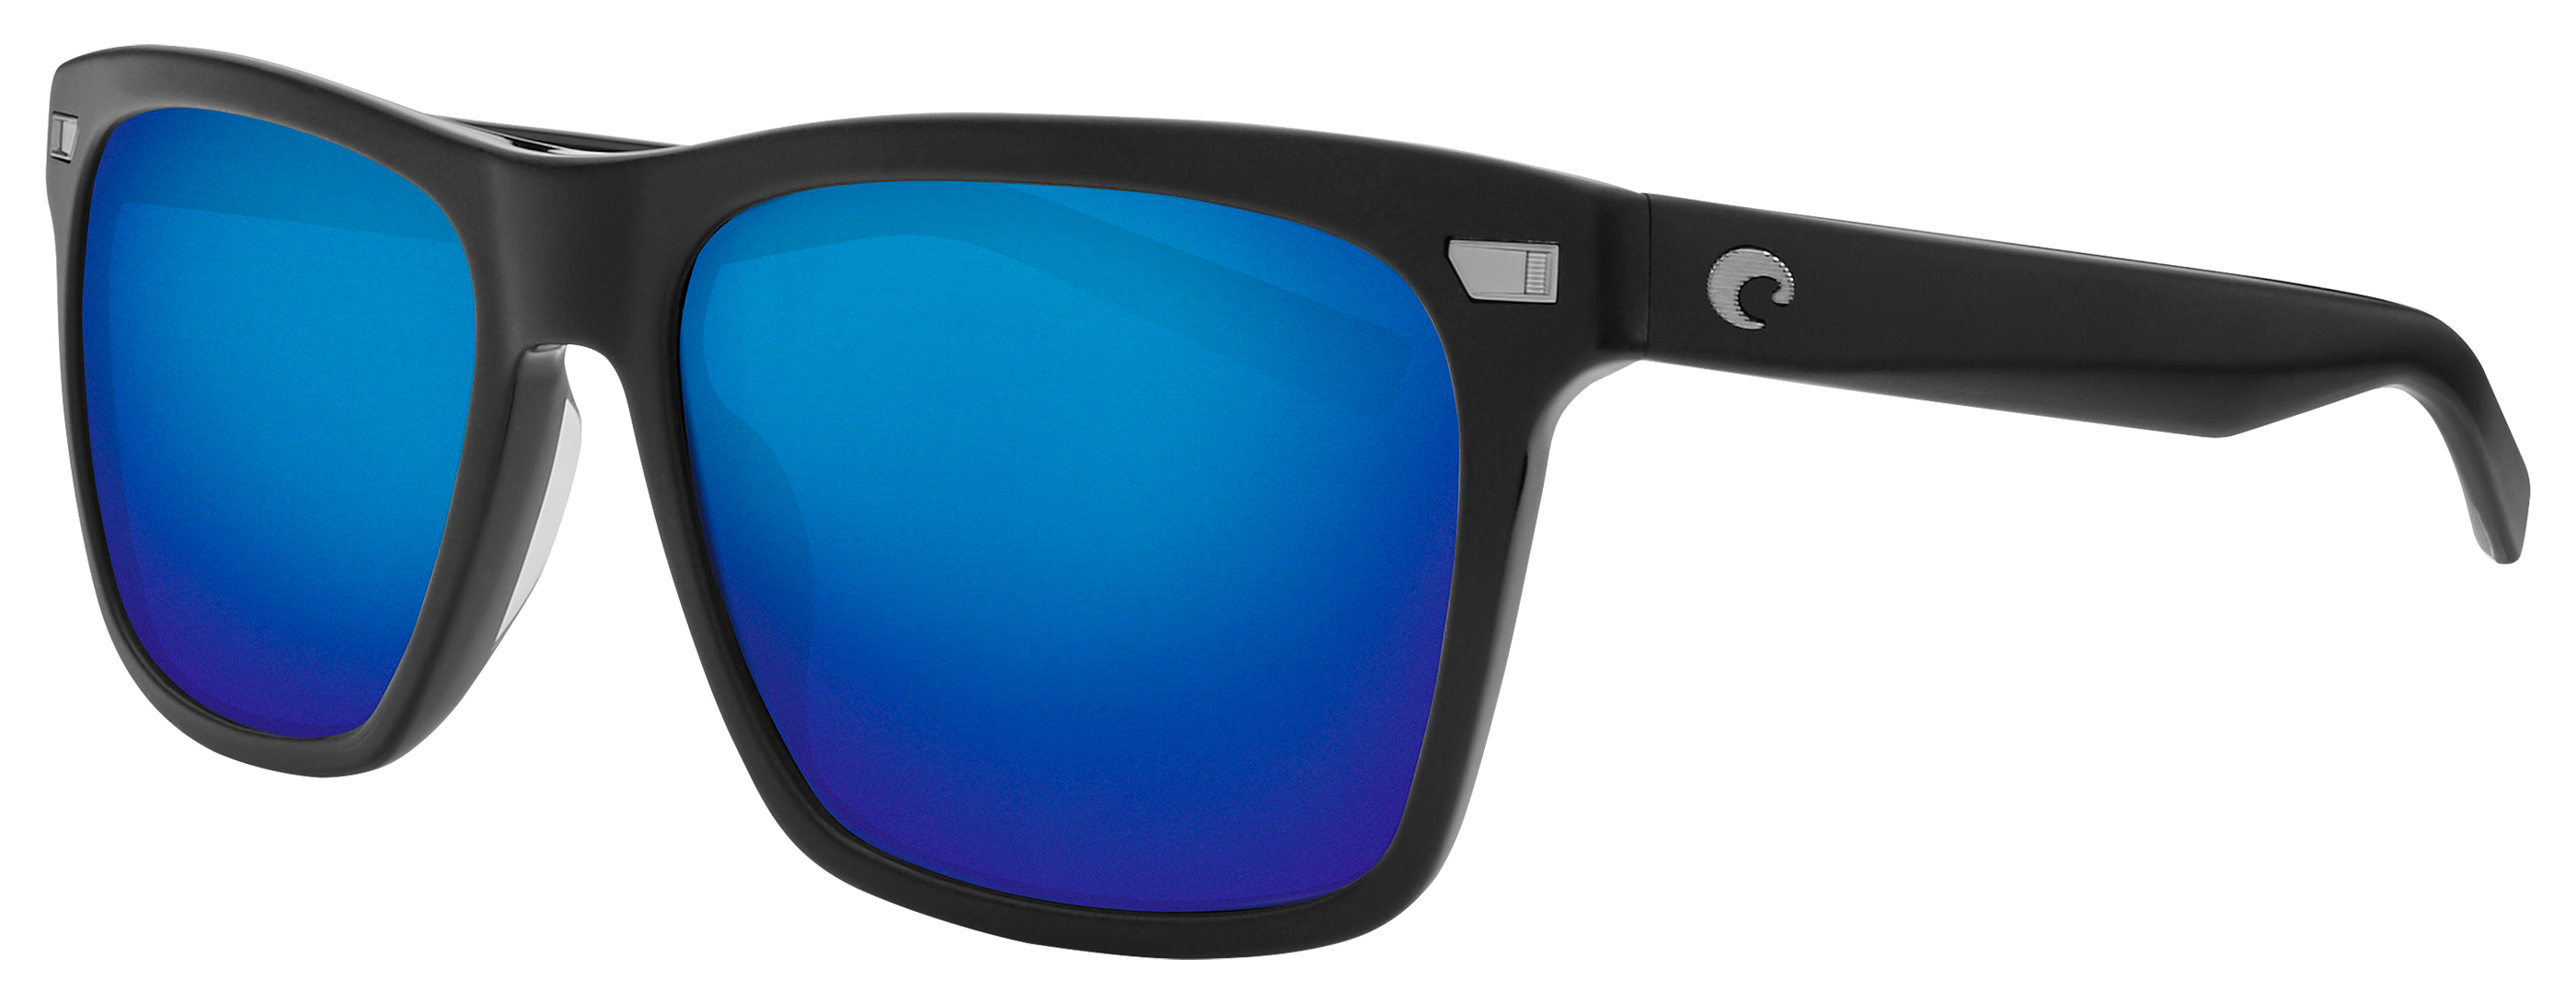 Costa Aransas 580G Polarized Sunglasses - Matte Black/Blue Mirror - Large -  Costa Del Mar